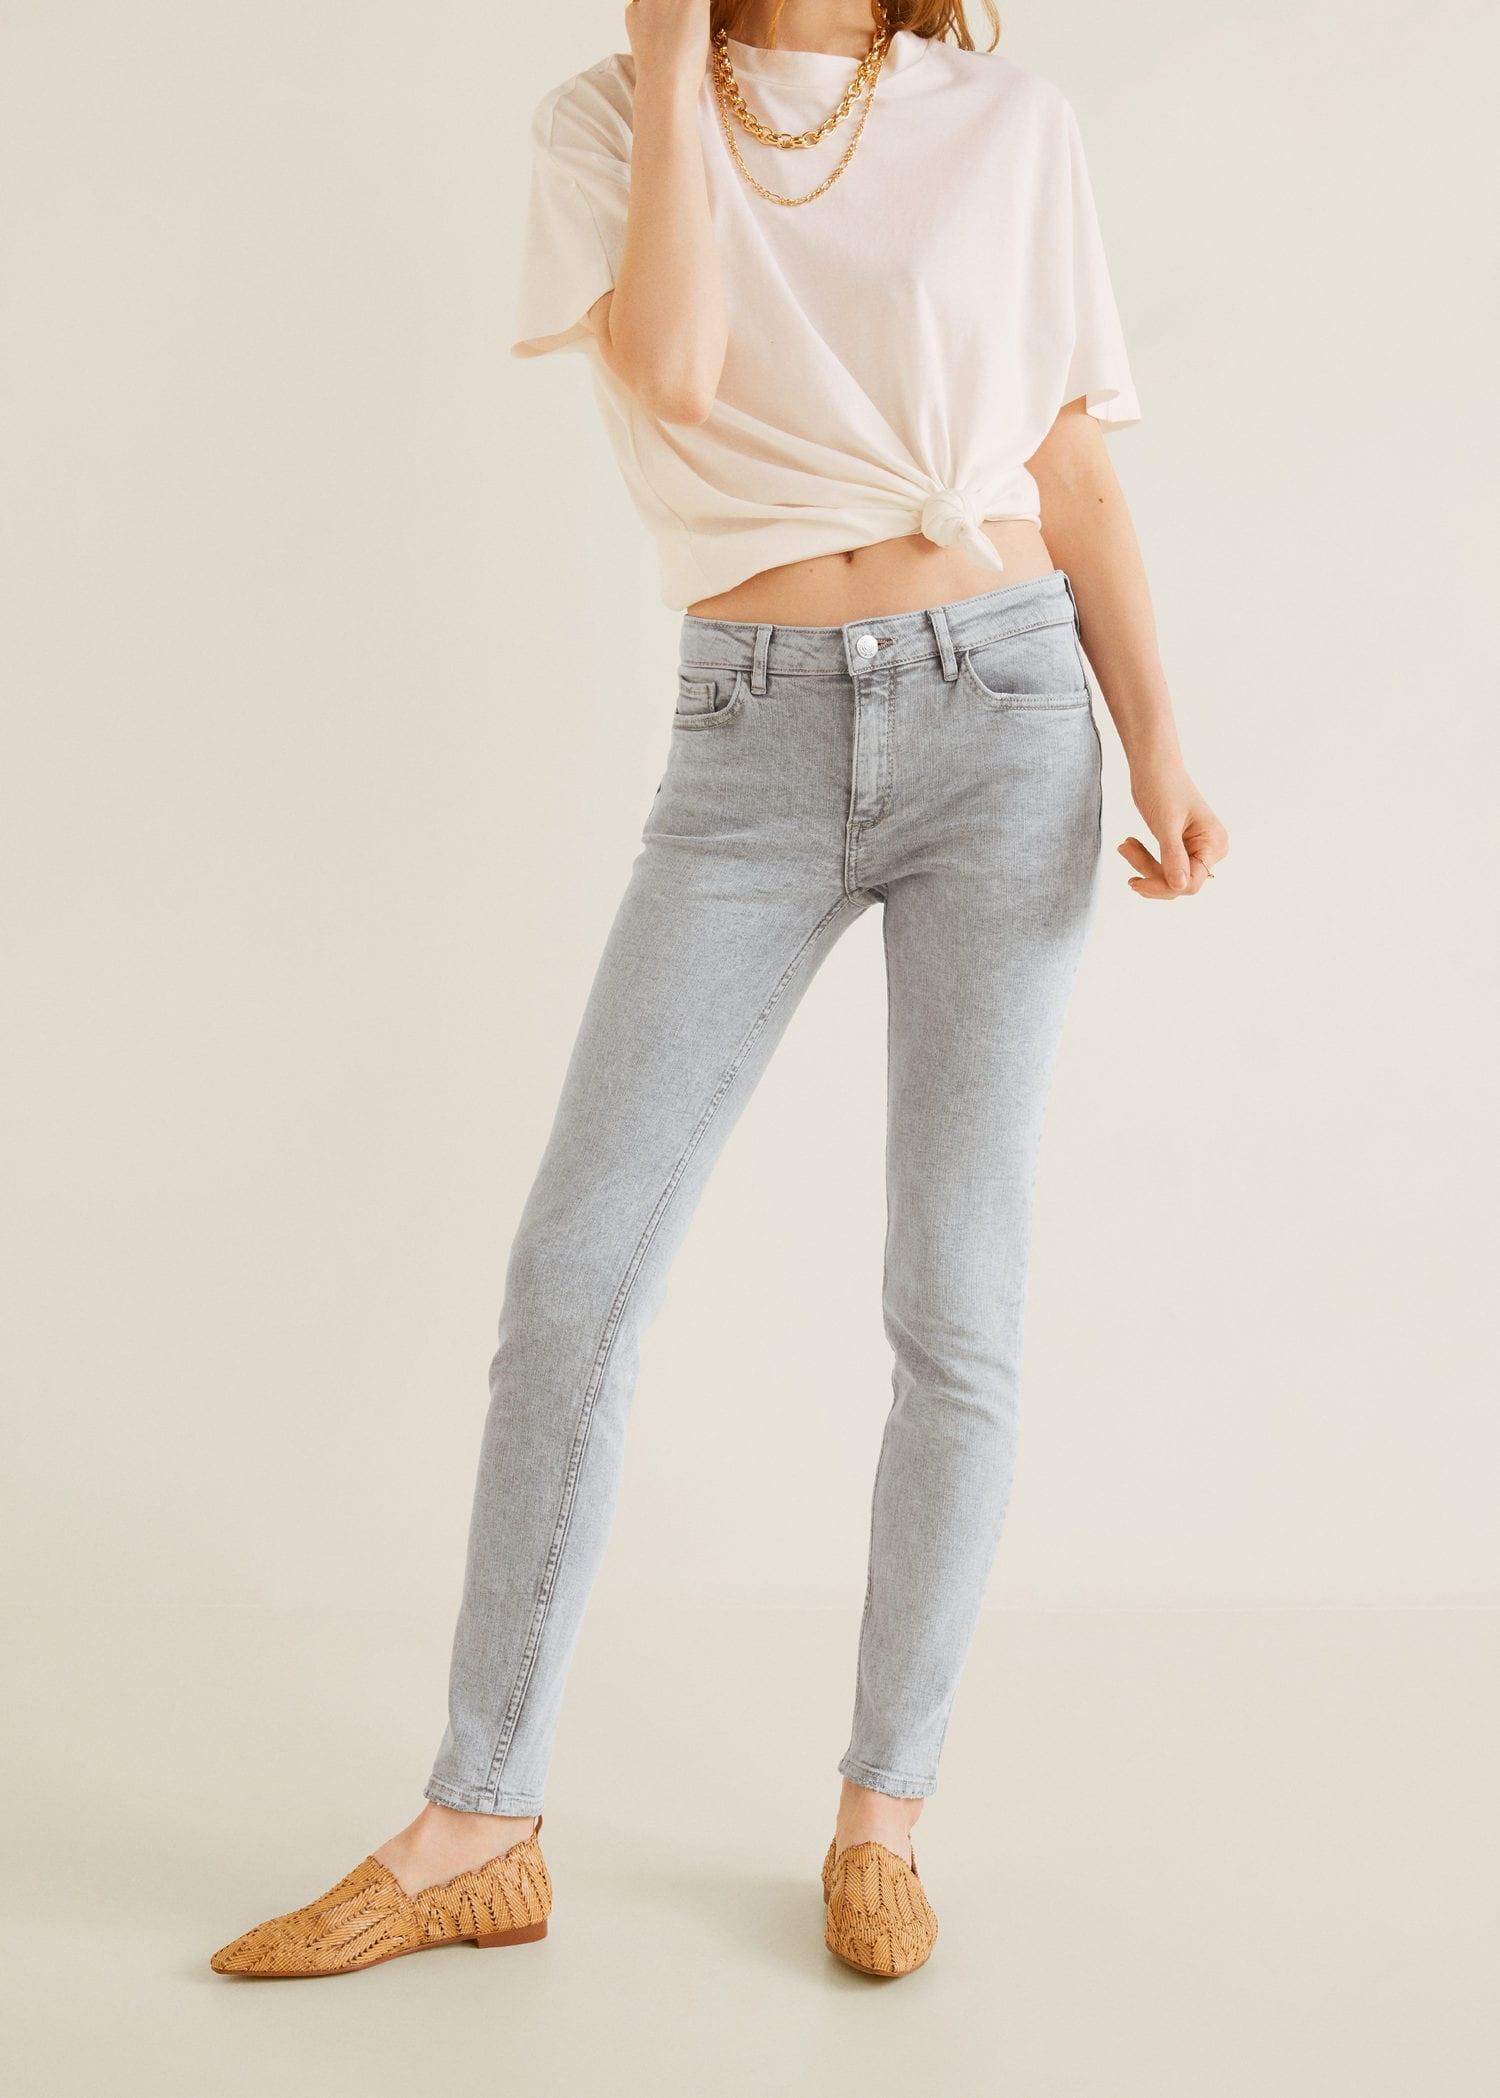 Mango Denim Kim Skinny Push-up Jeans in Denim Grey (Gray) - Lyst